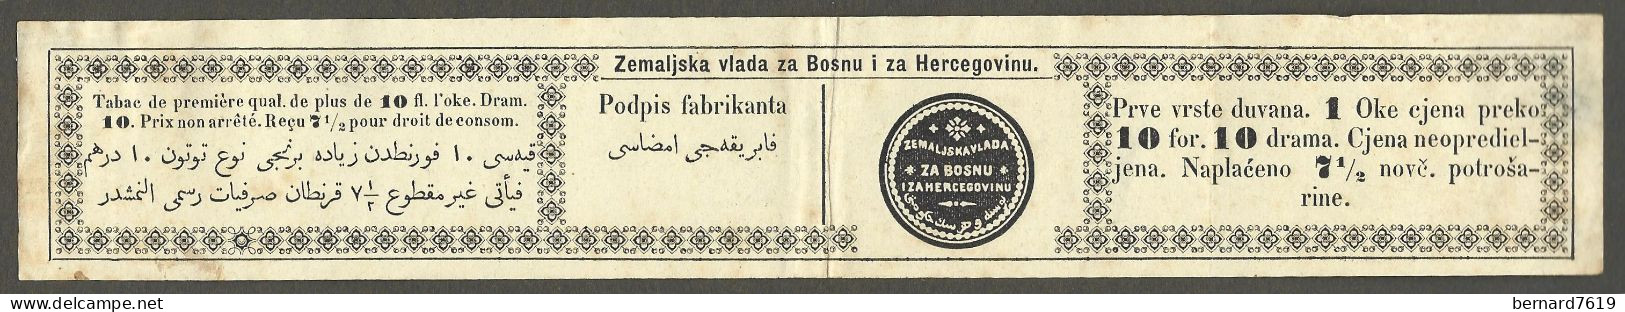 Bande  Tabac  A Priser   1870  - 1900  -zemaljska Vlada  Za Bosnu I Za  Hercegovinu  -10 Drama - Bosnie - Hercegovie - Documenti